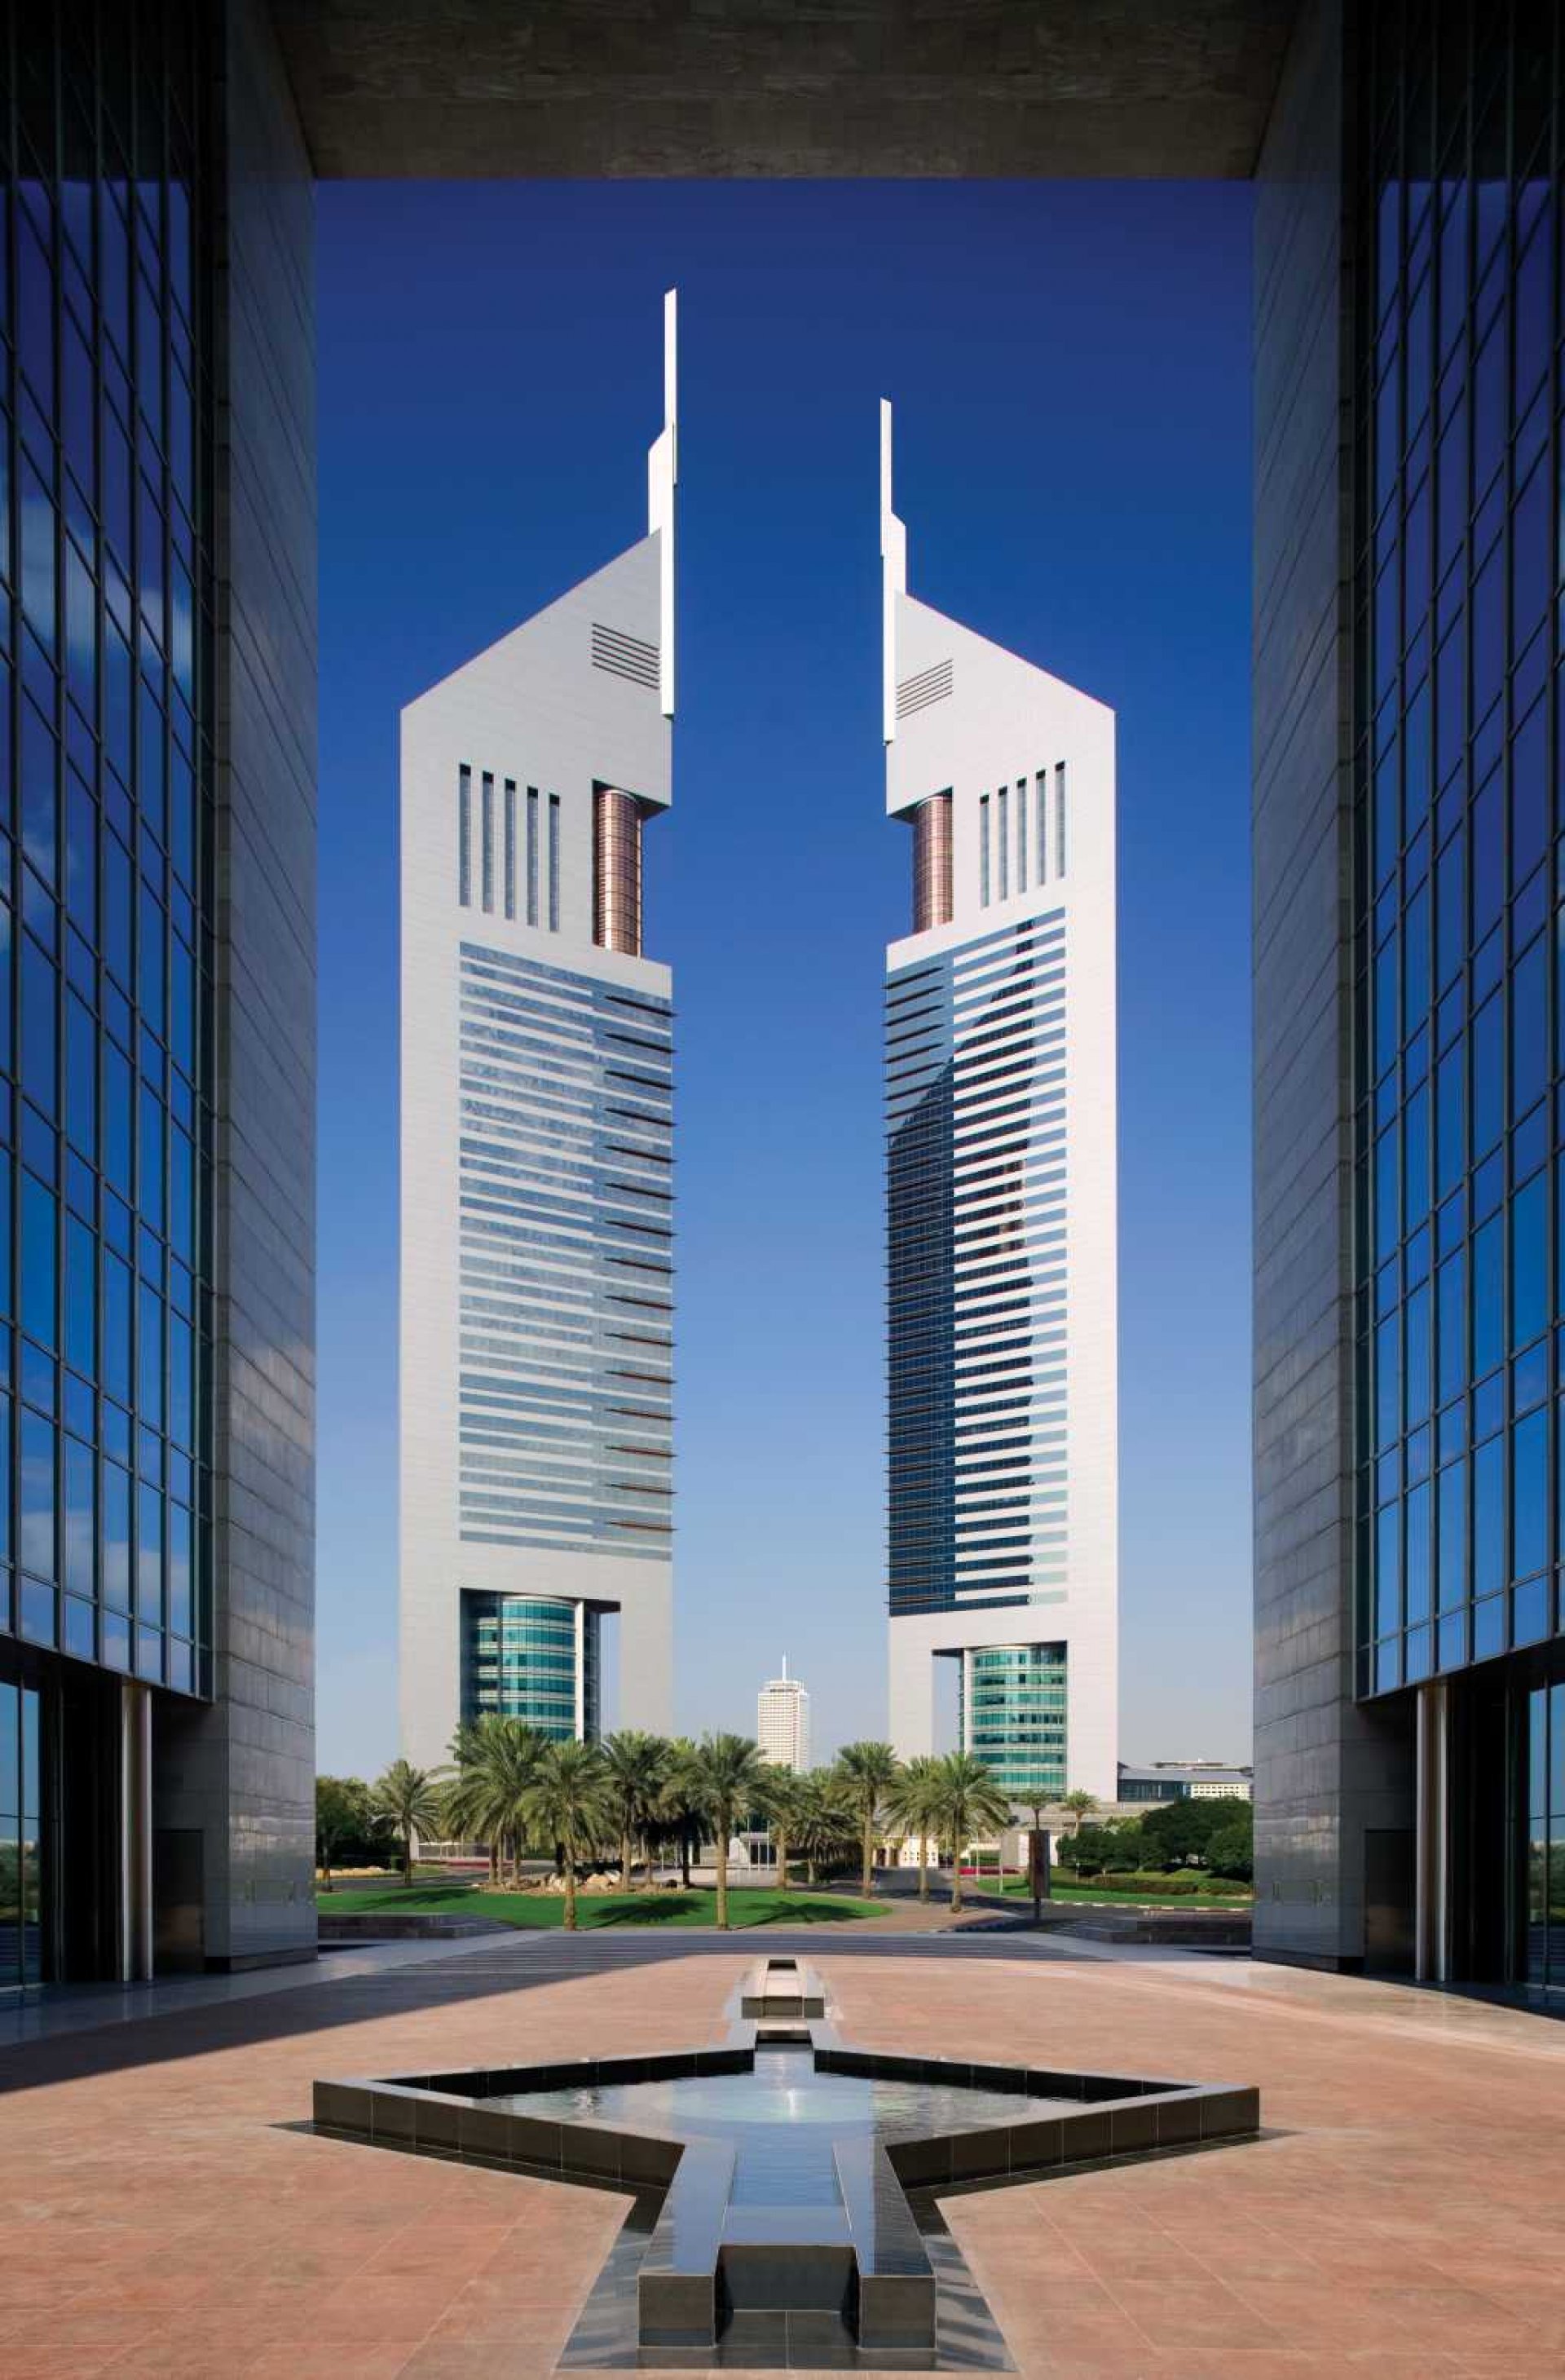 Architecture Towers Dubai United Arab Emirates 626762 - Jumeirah Emirates Towers Hotel - HD Wallpaper 